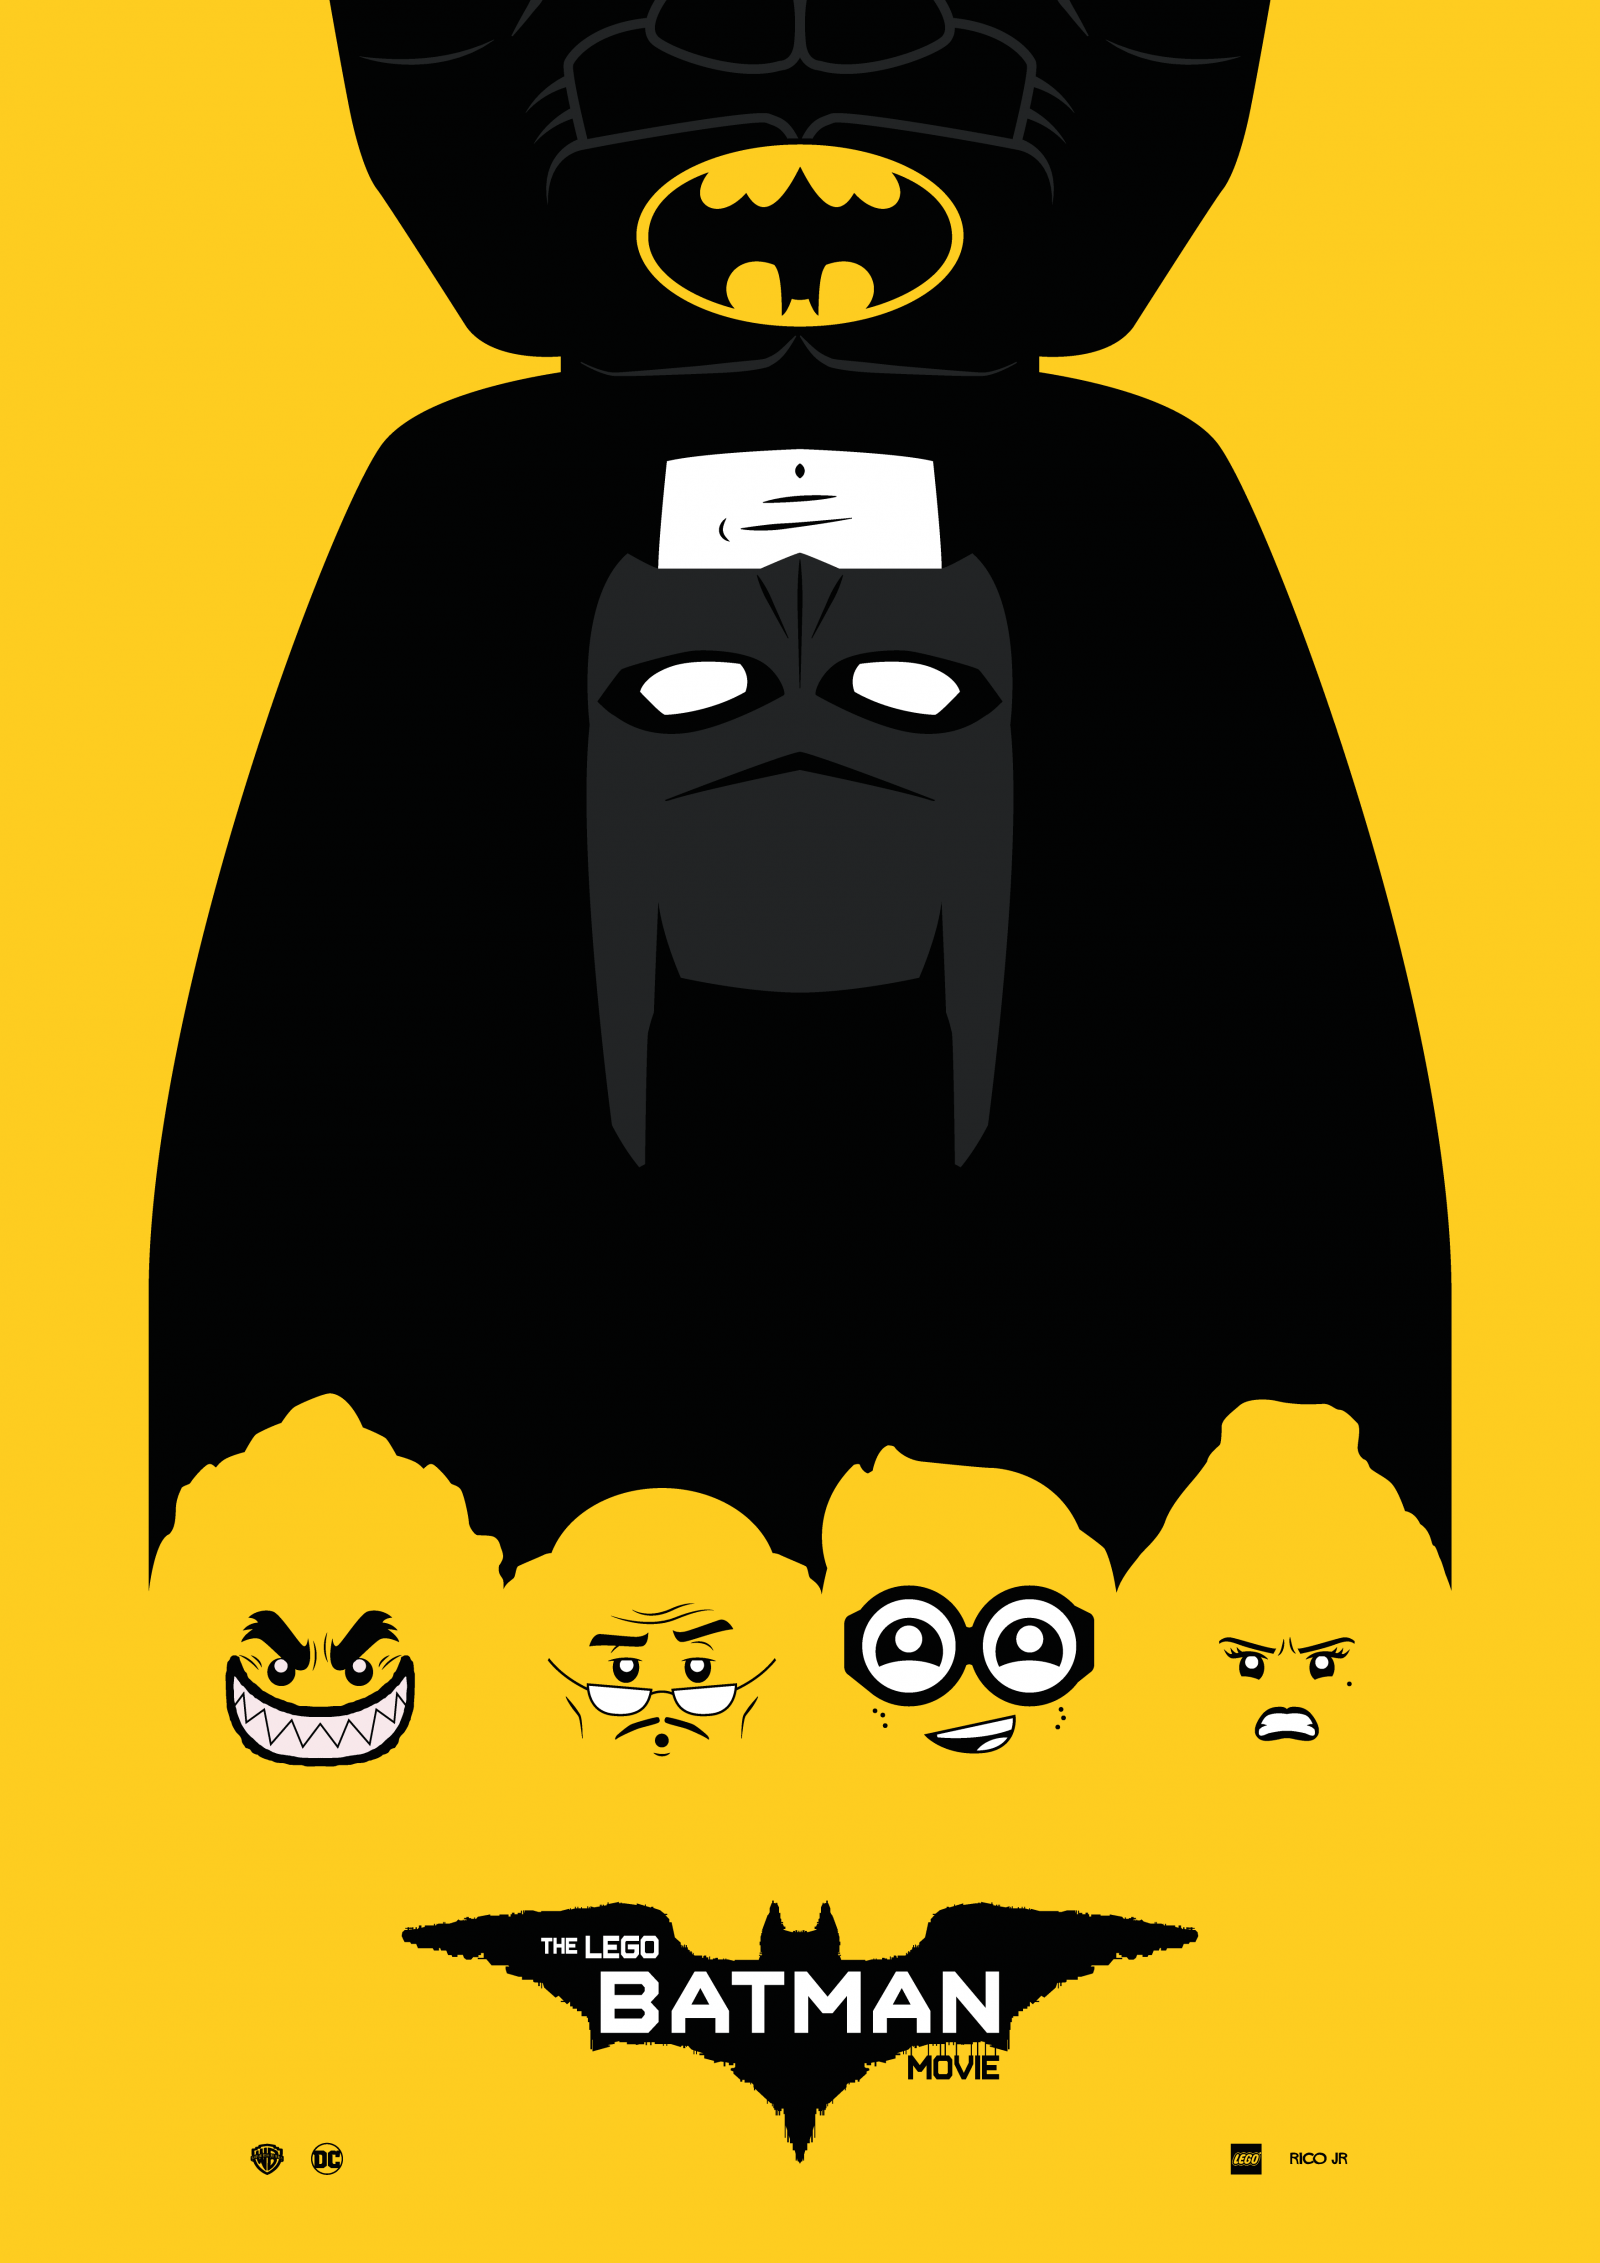 The LEGO Batman Movie (2017) HD Wallpaper From Gallsource.com